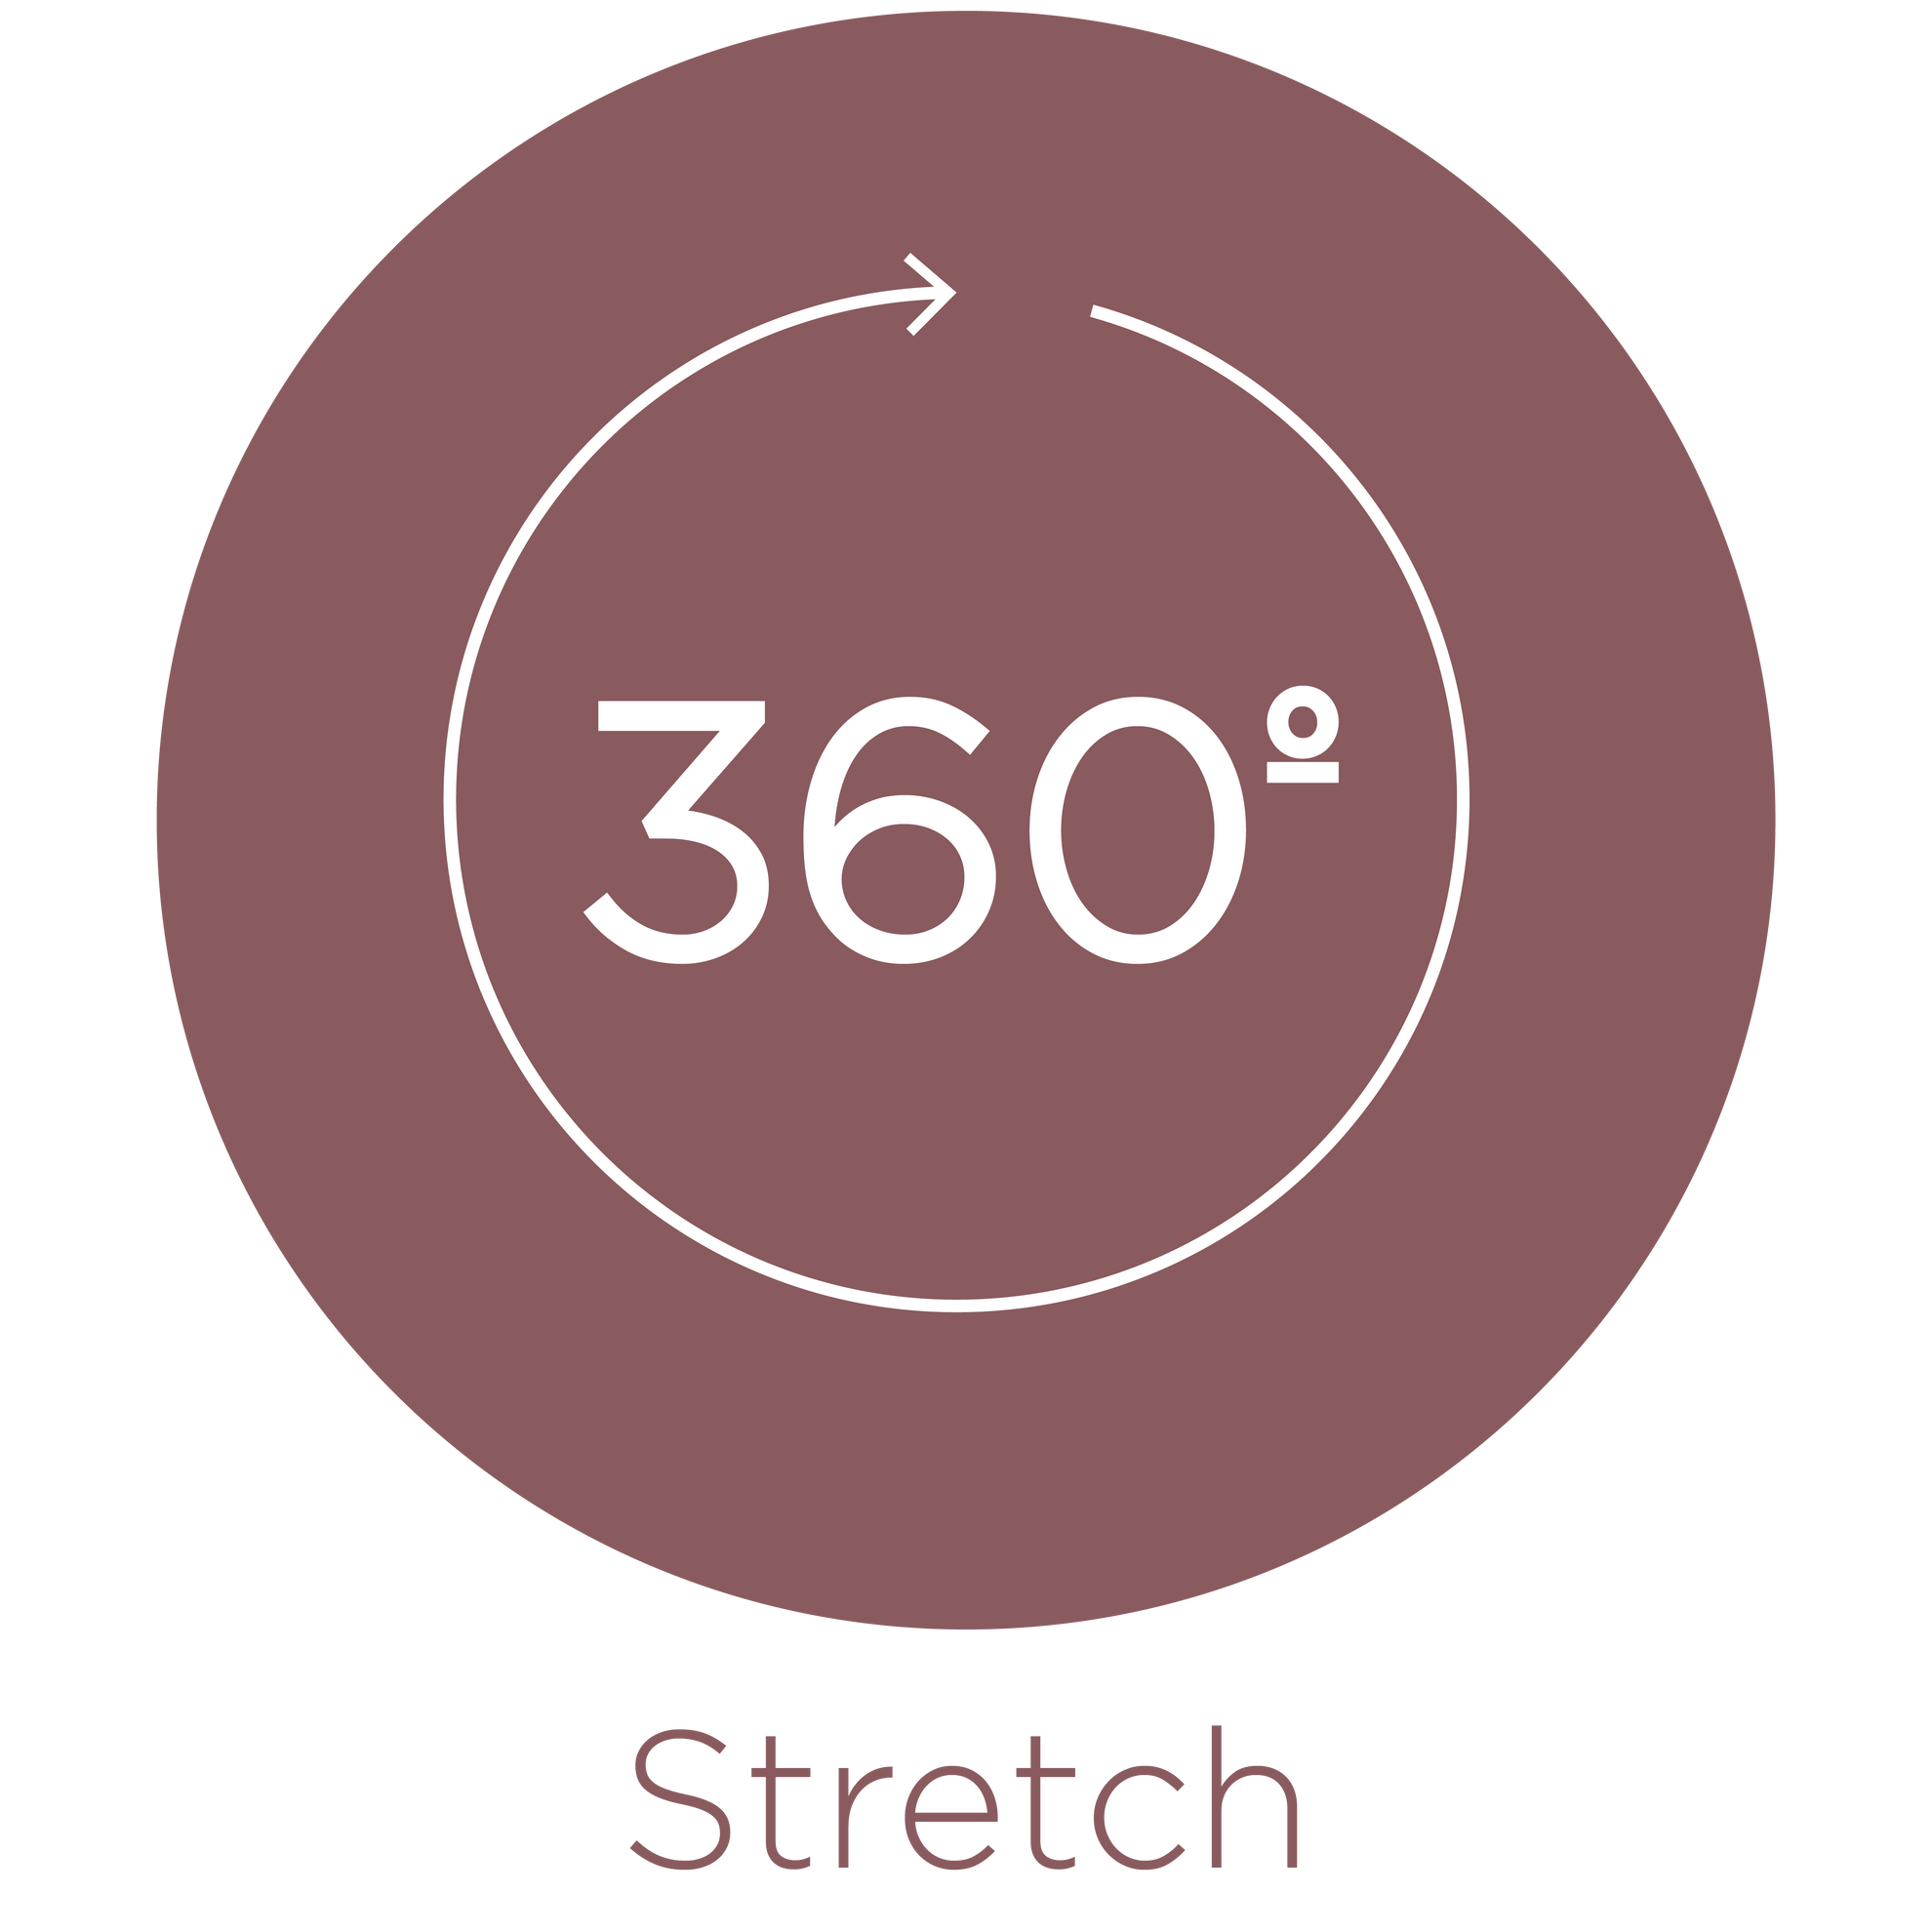 360 degree stretch icon